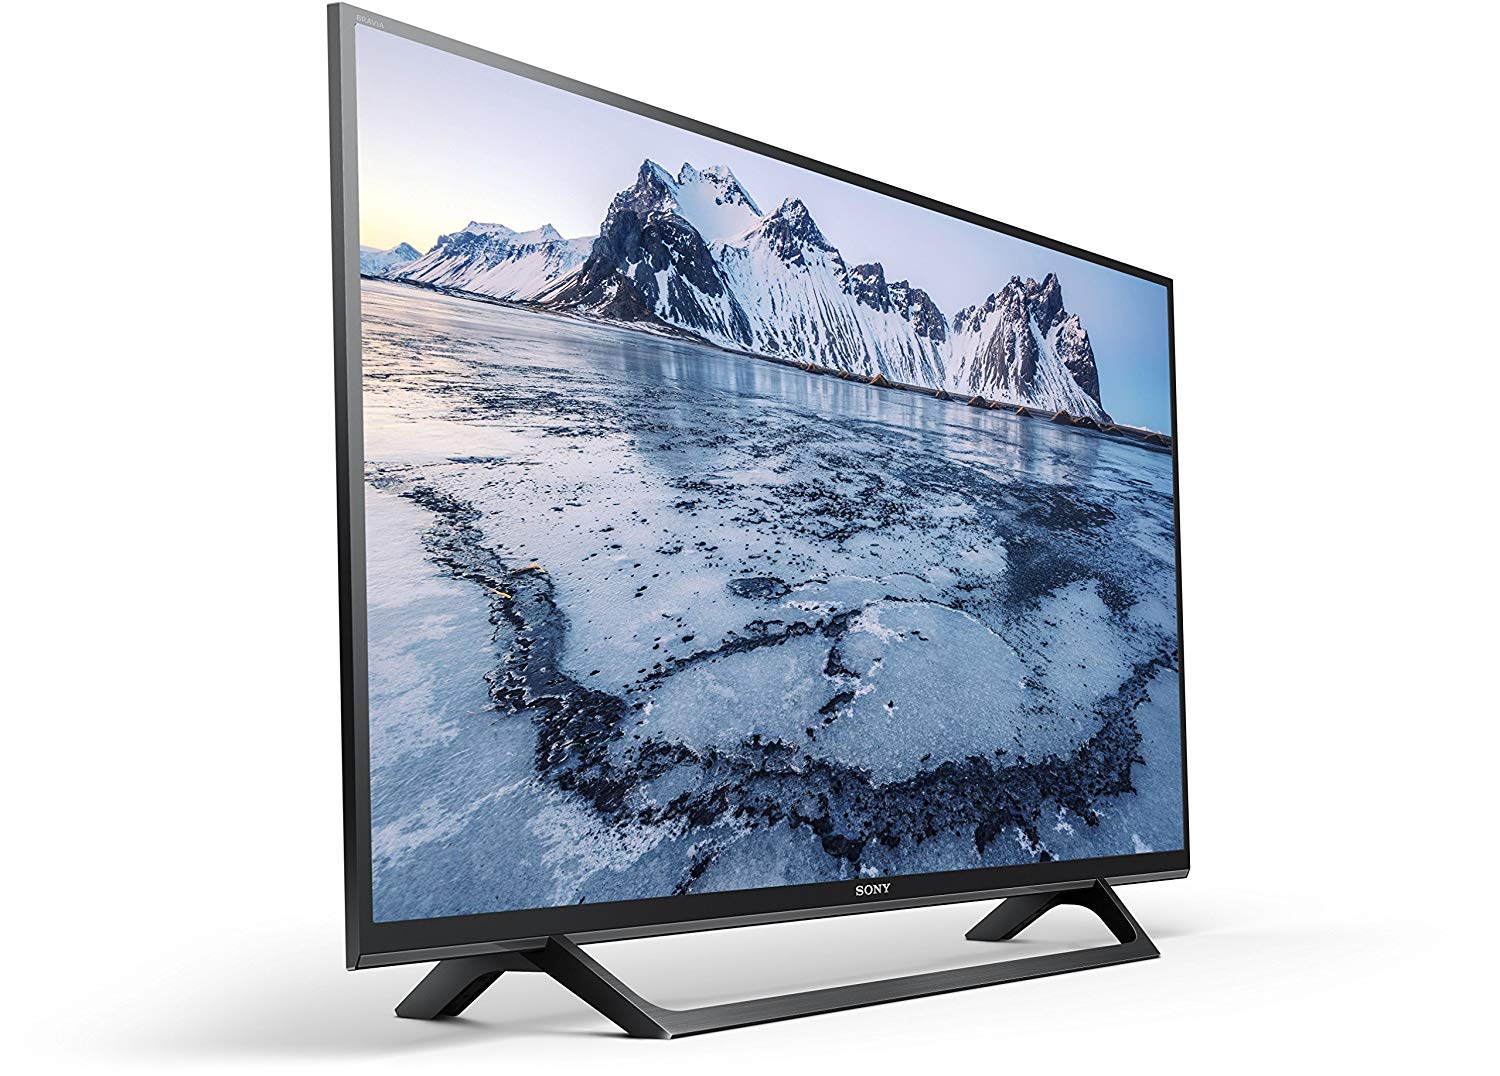 Sony Smart LED TV 32WE615 #avtvrasprodaja